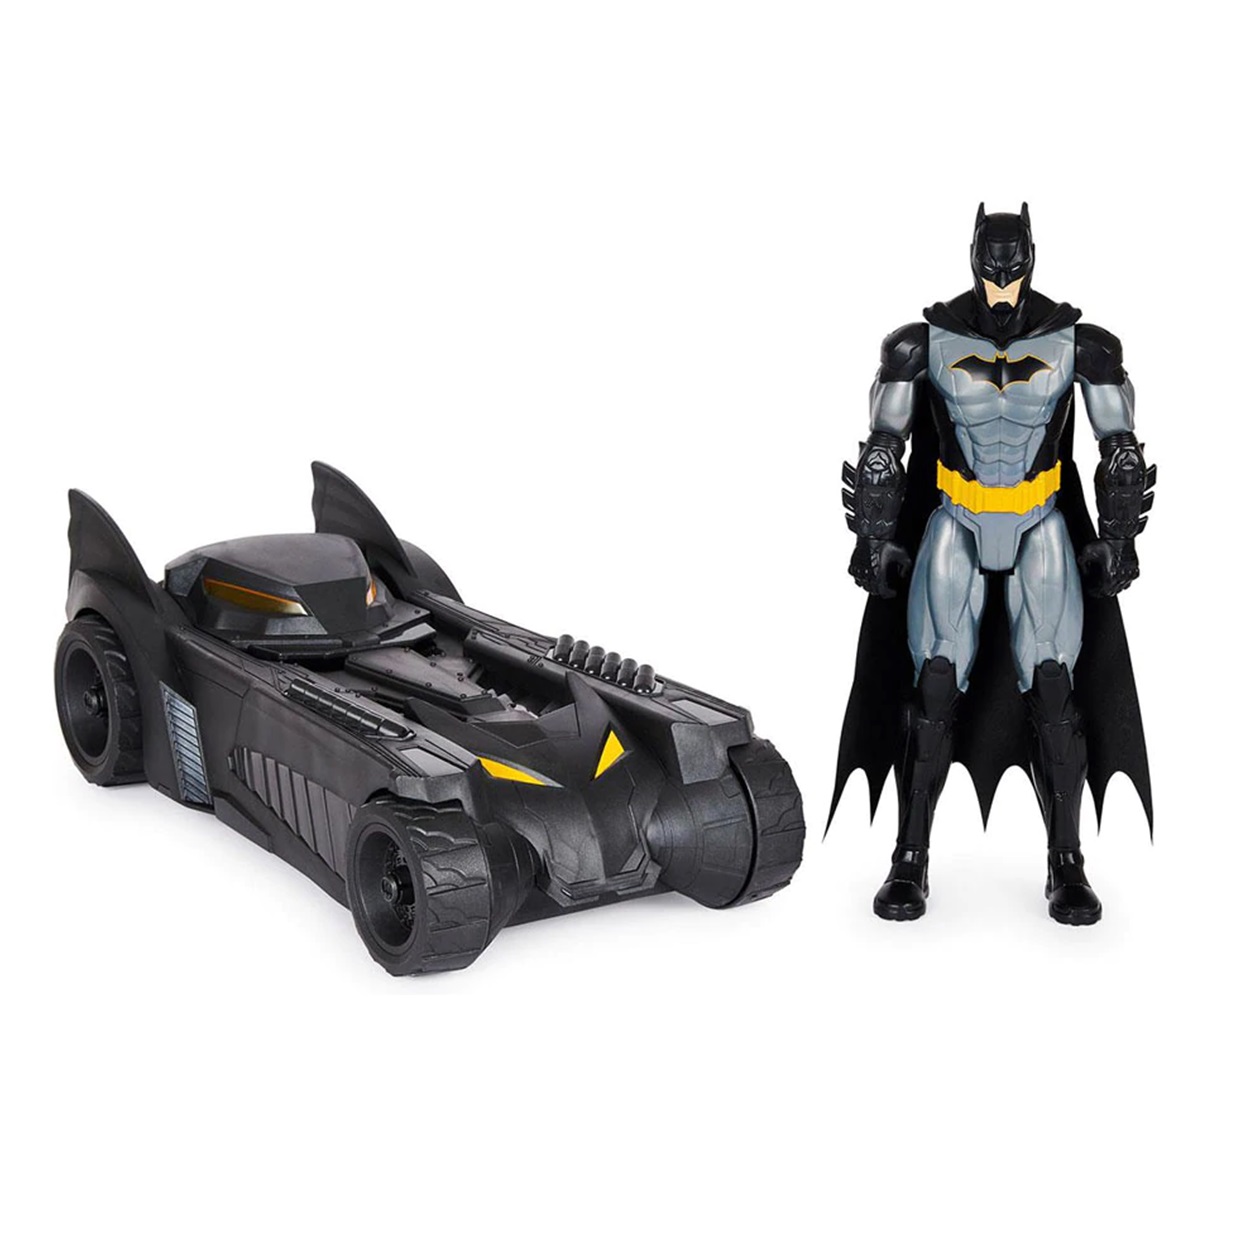 Pack Tactical Batman + Batmobile Figura The Caped Crusader